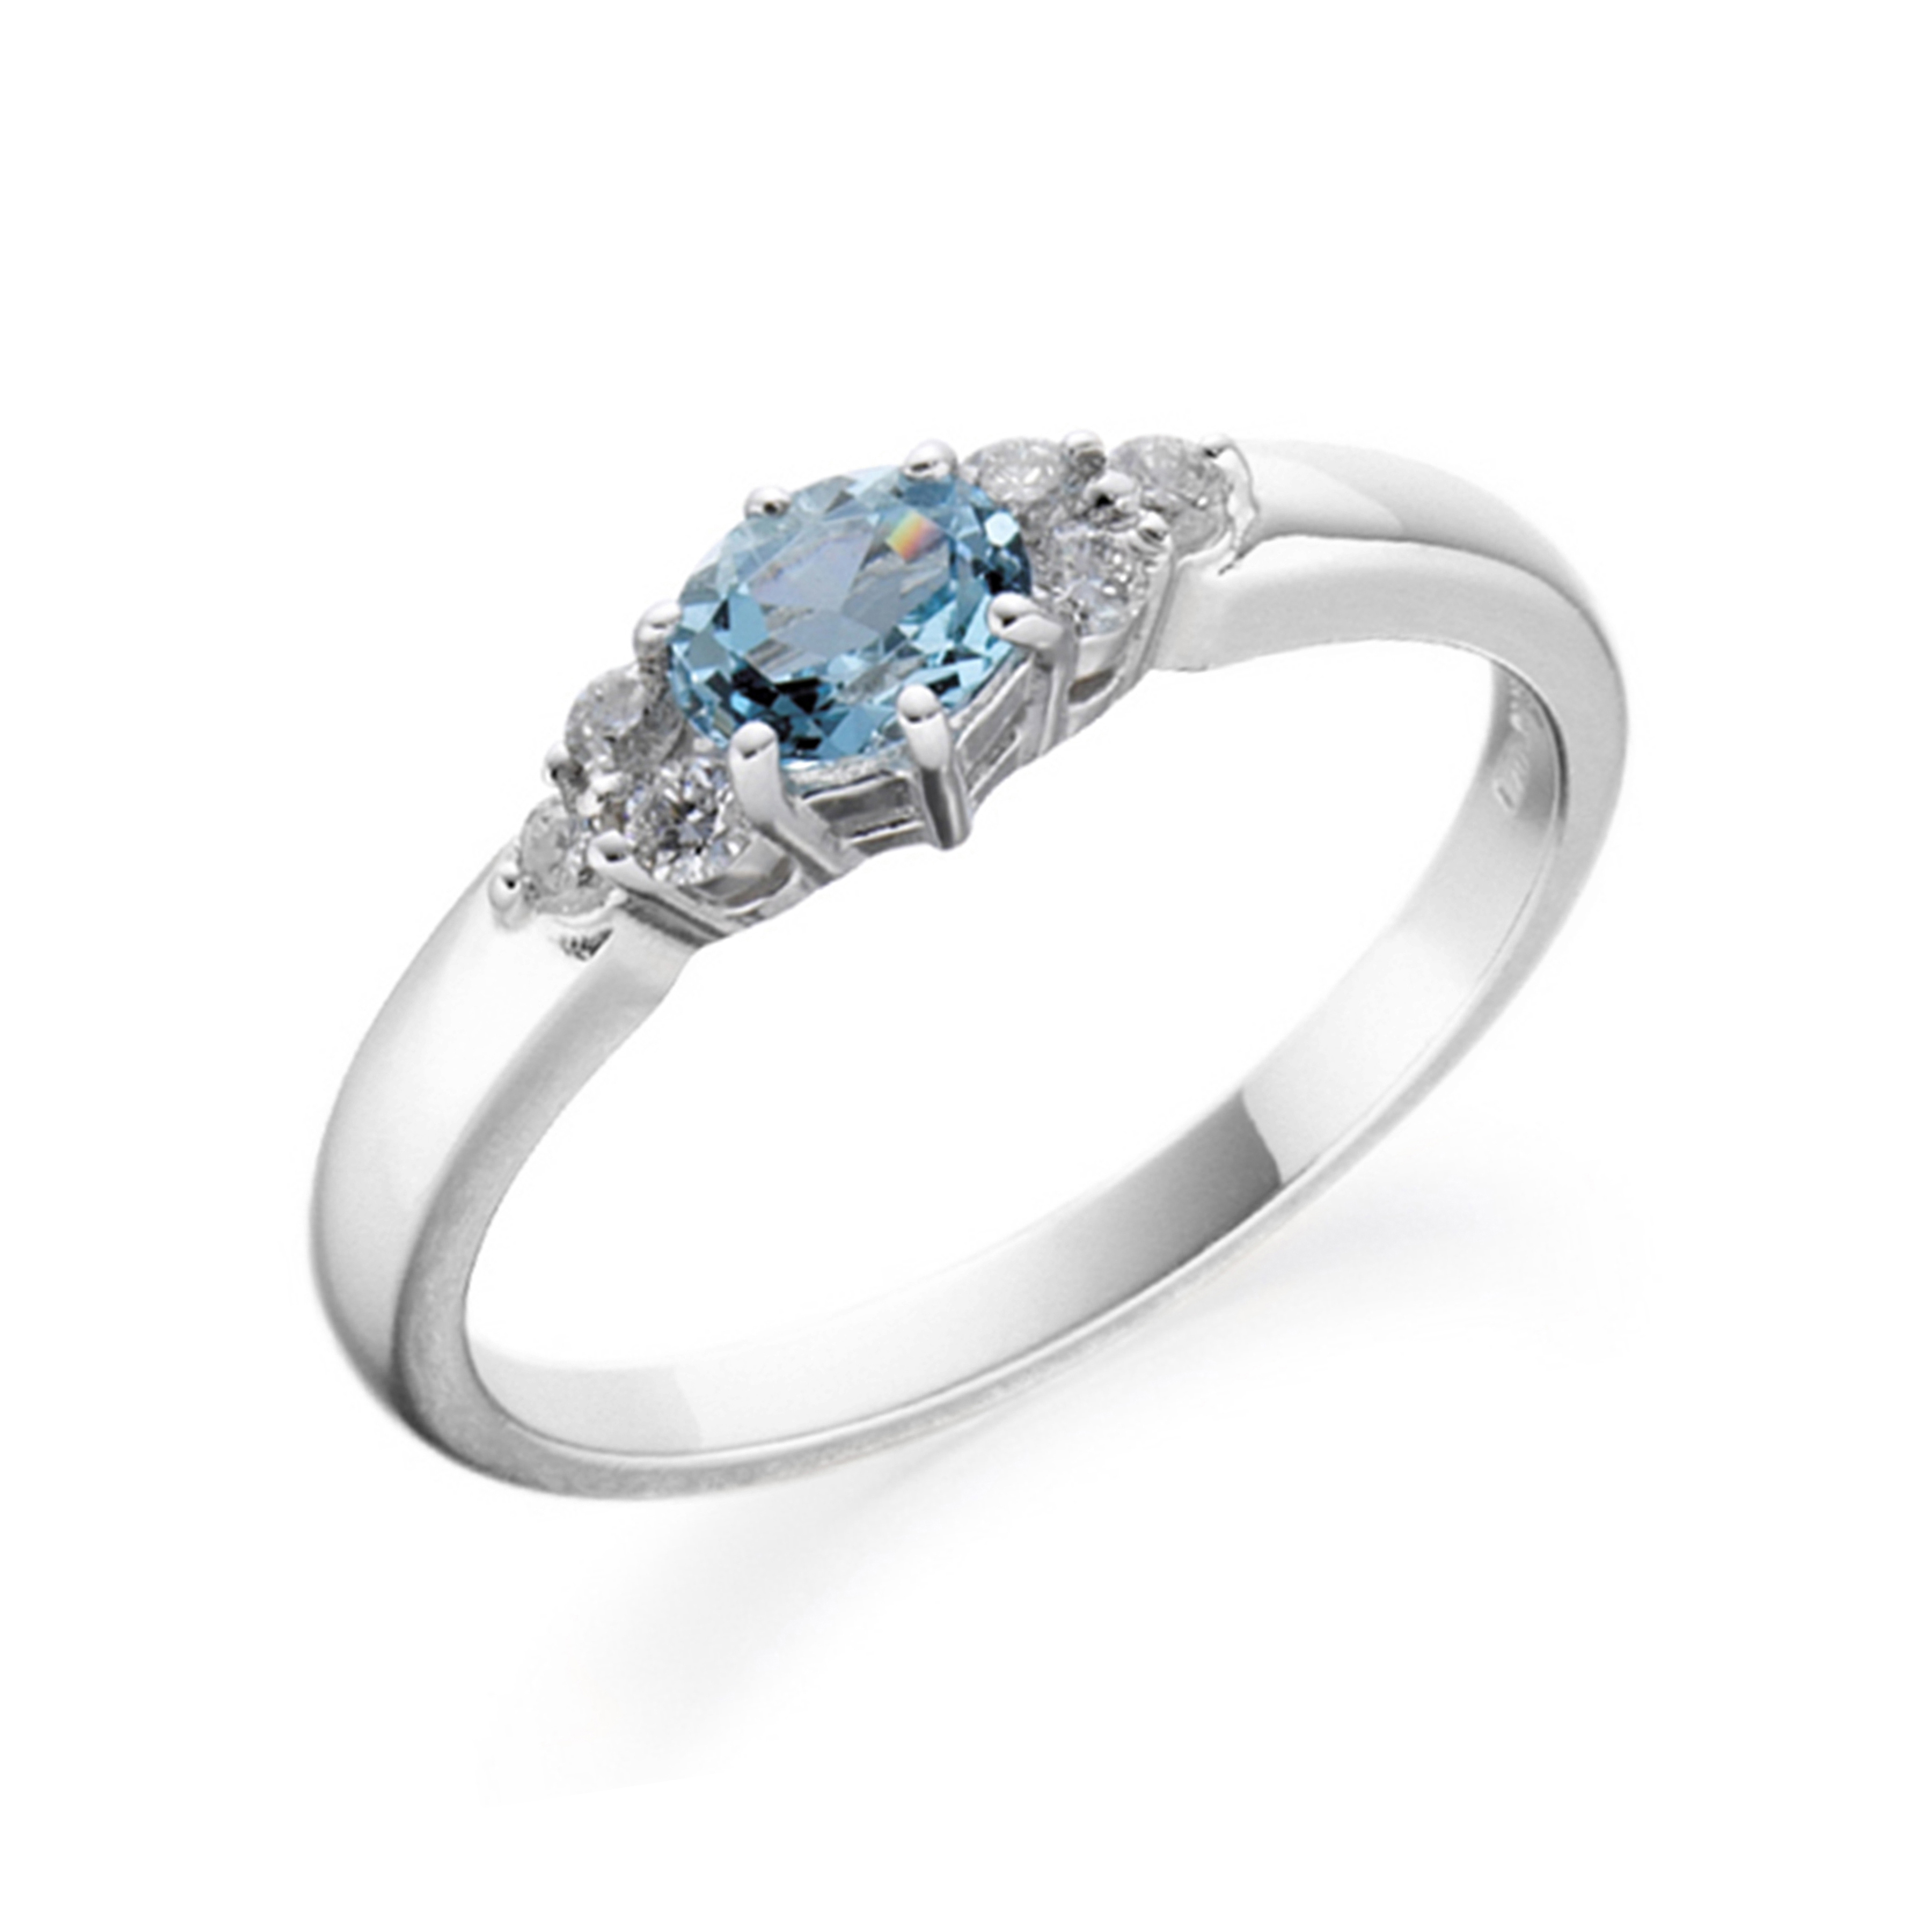 Oval Cut Aquamarine Seven Stone Diamond And Gemstone Rings